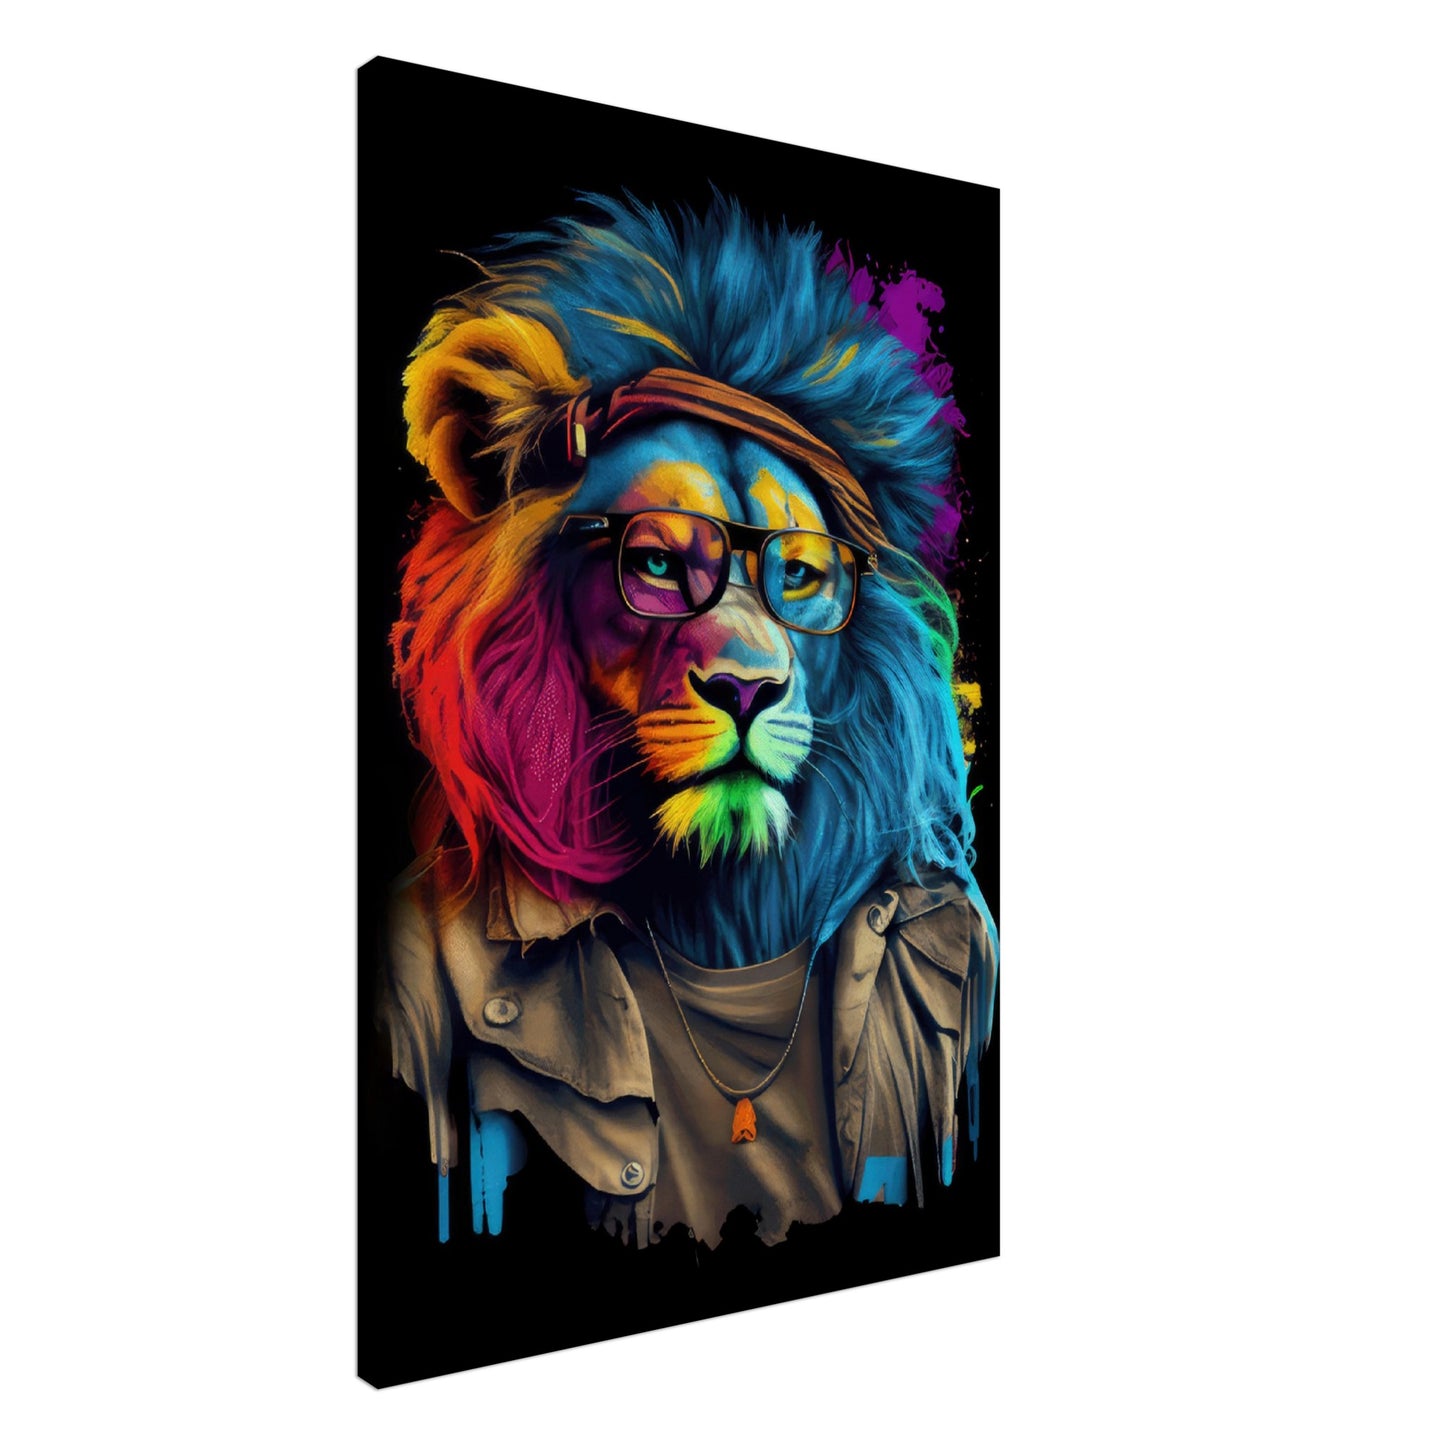 Fierce & Fabulous - Löwen Wandbild - Crazy Wildlife Leinwand ColorWorld im Hochformat - Coole Tiere & Animals Kunstdruck